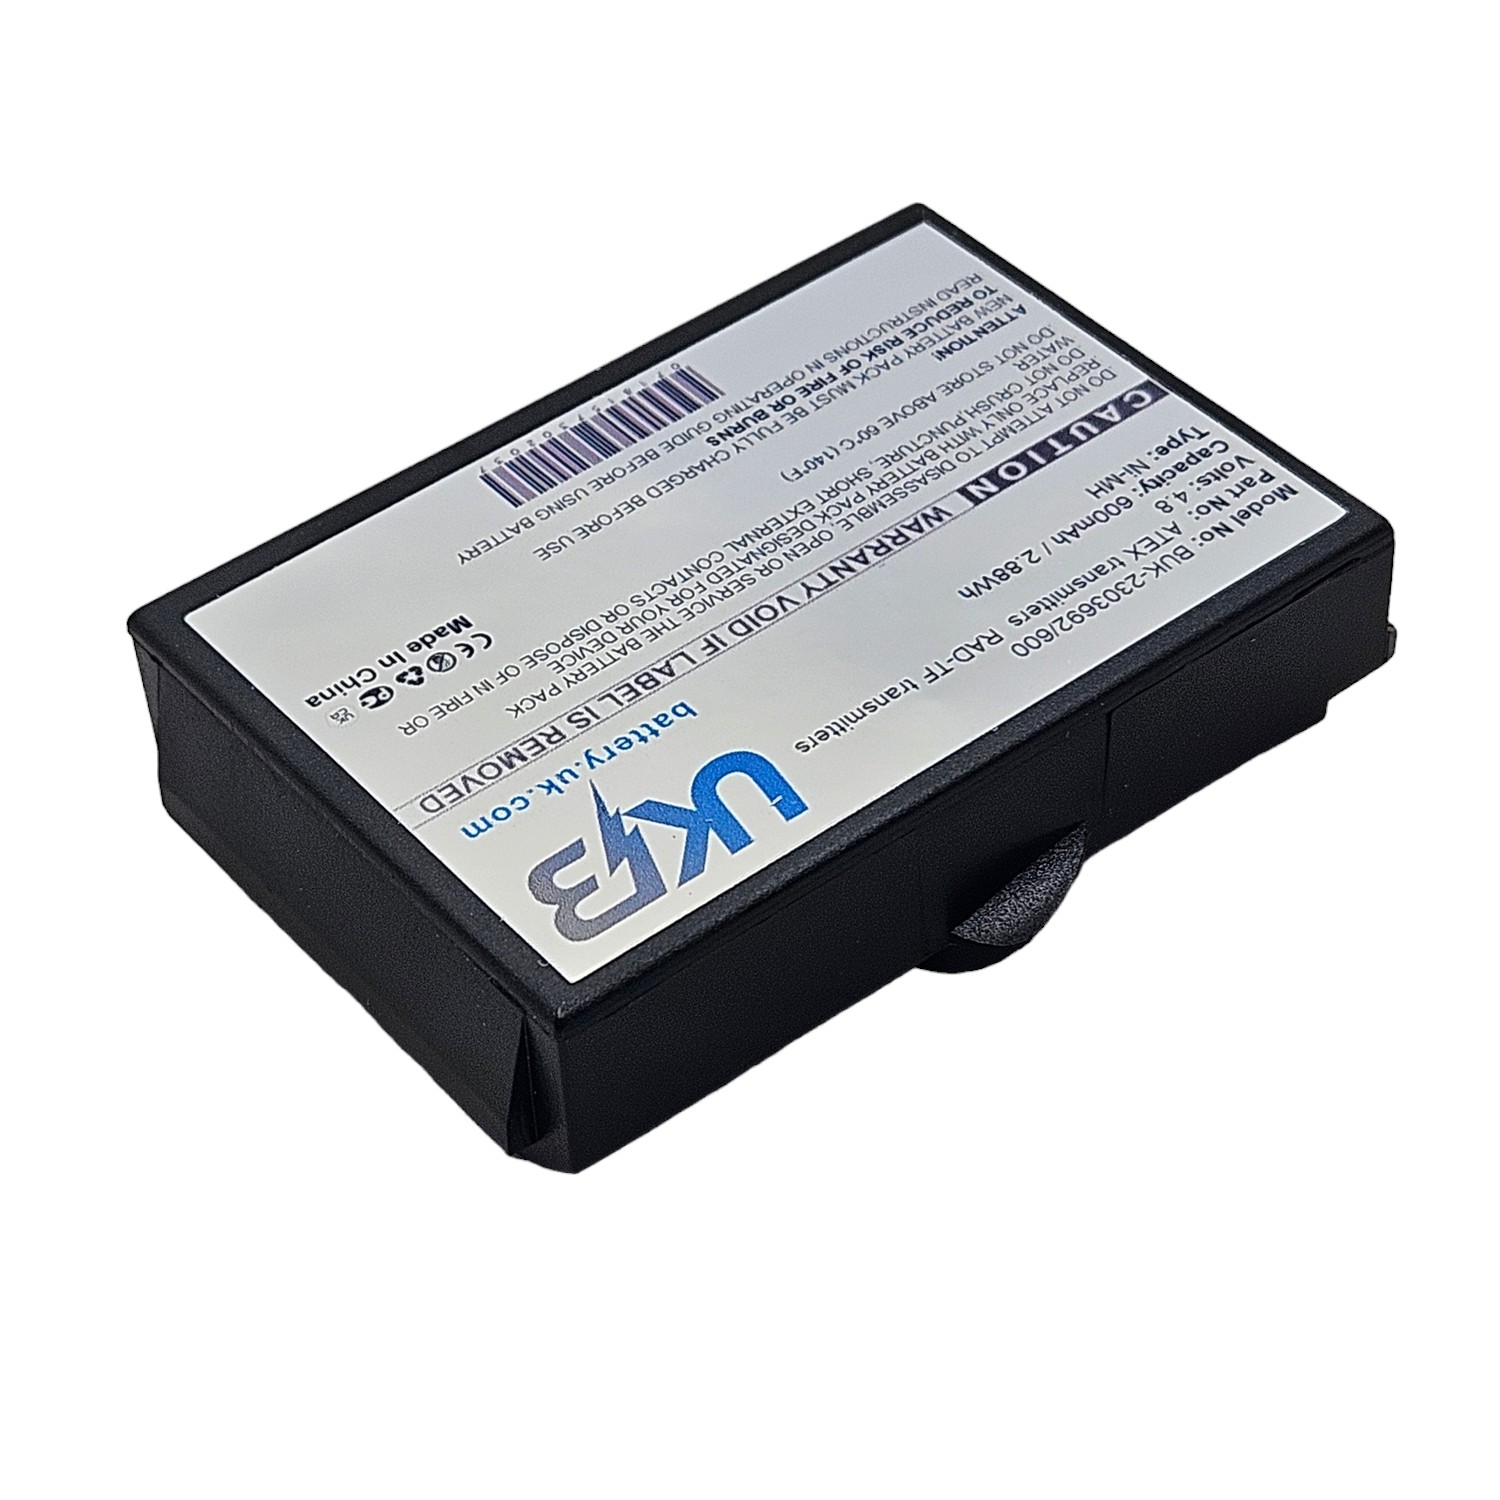 IKUSI T72 ATEX transmitters Compatible Replacement Battery